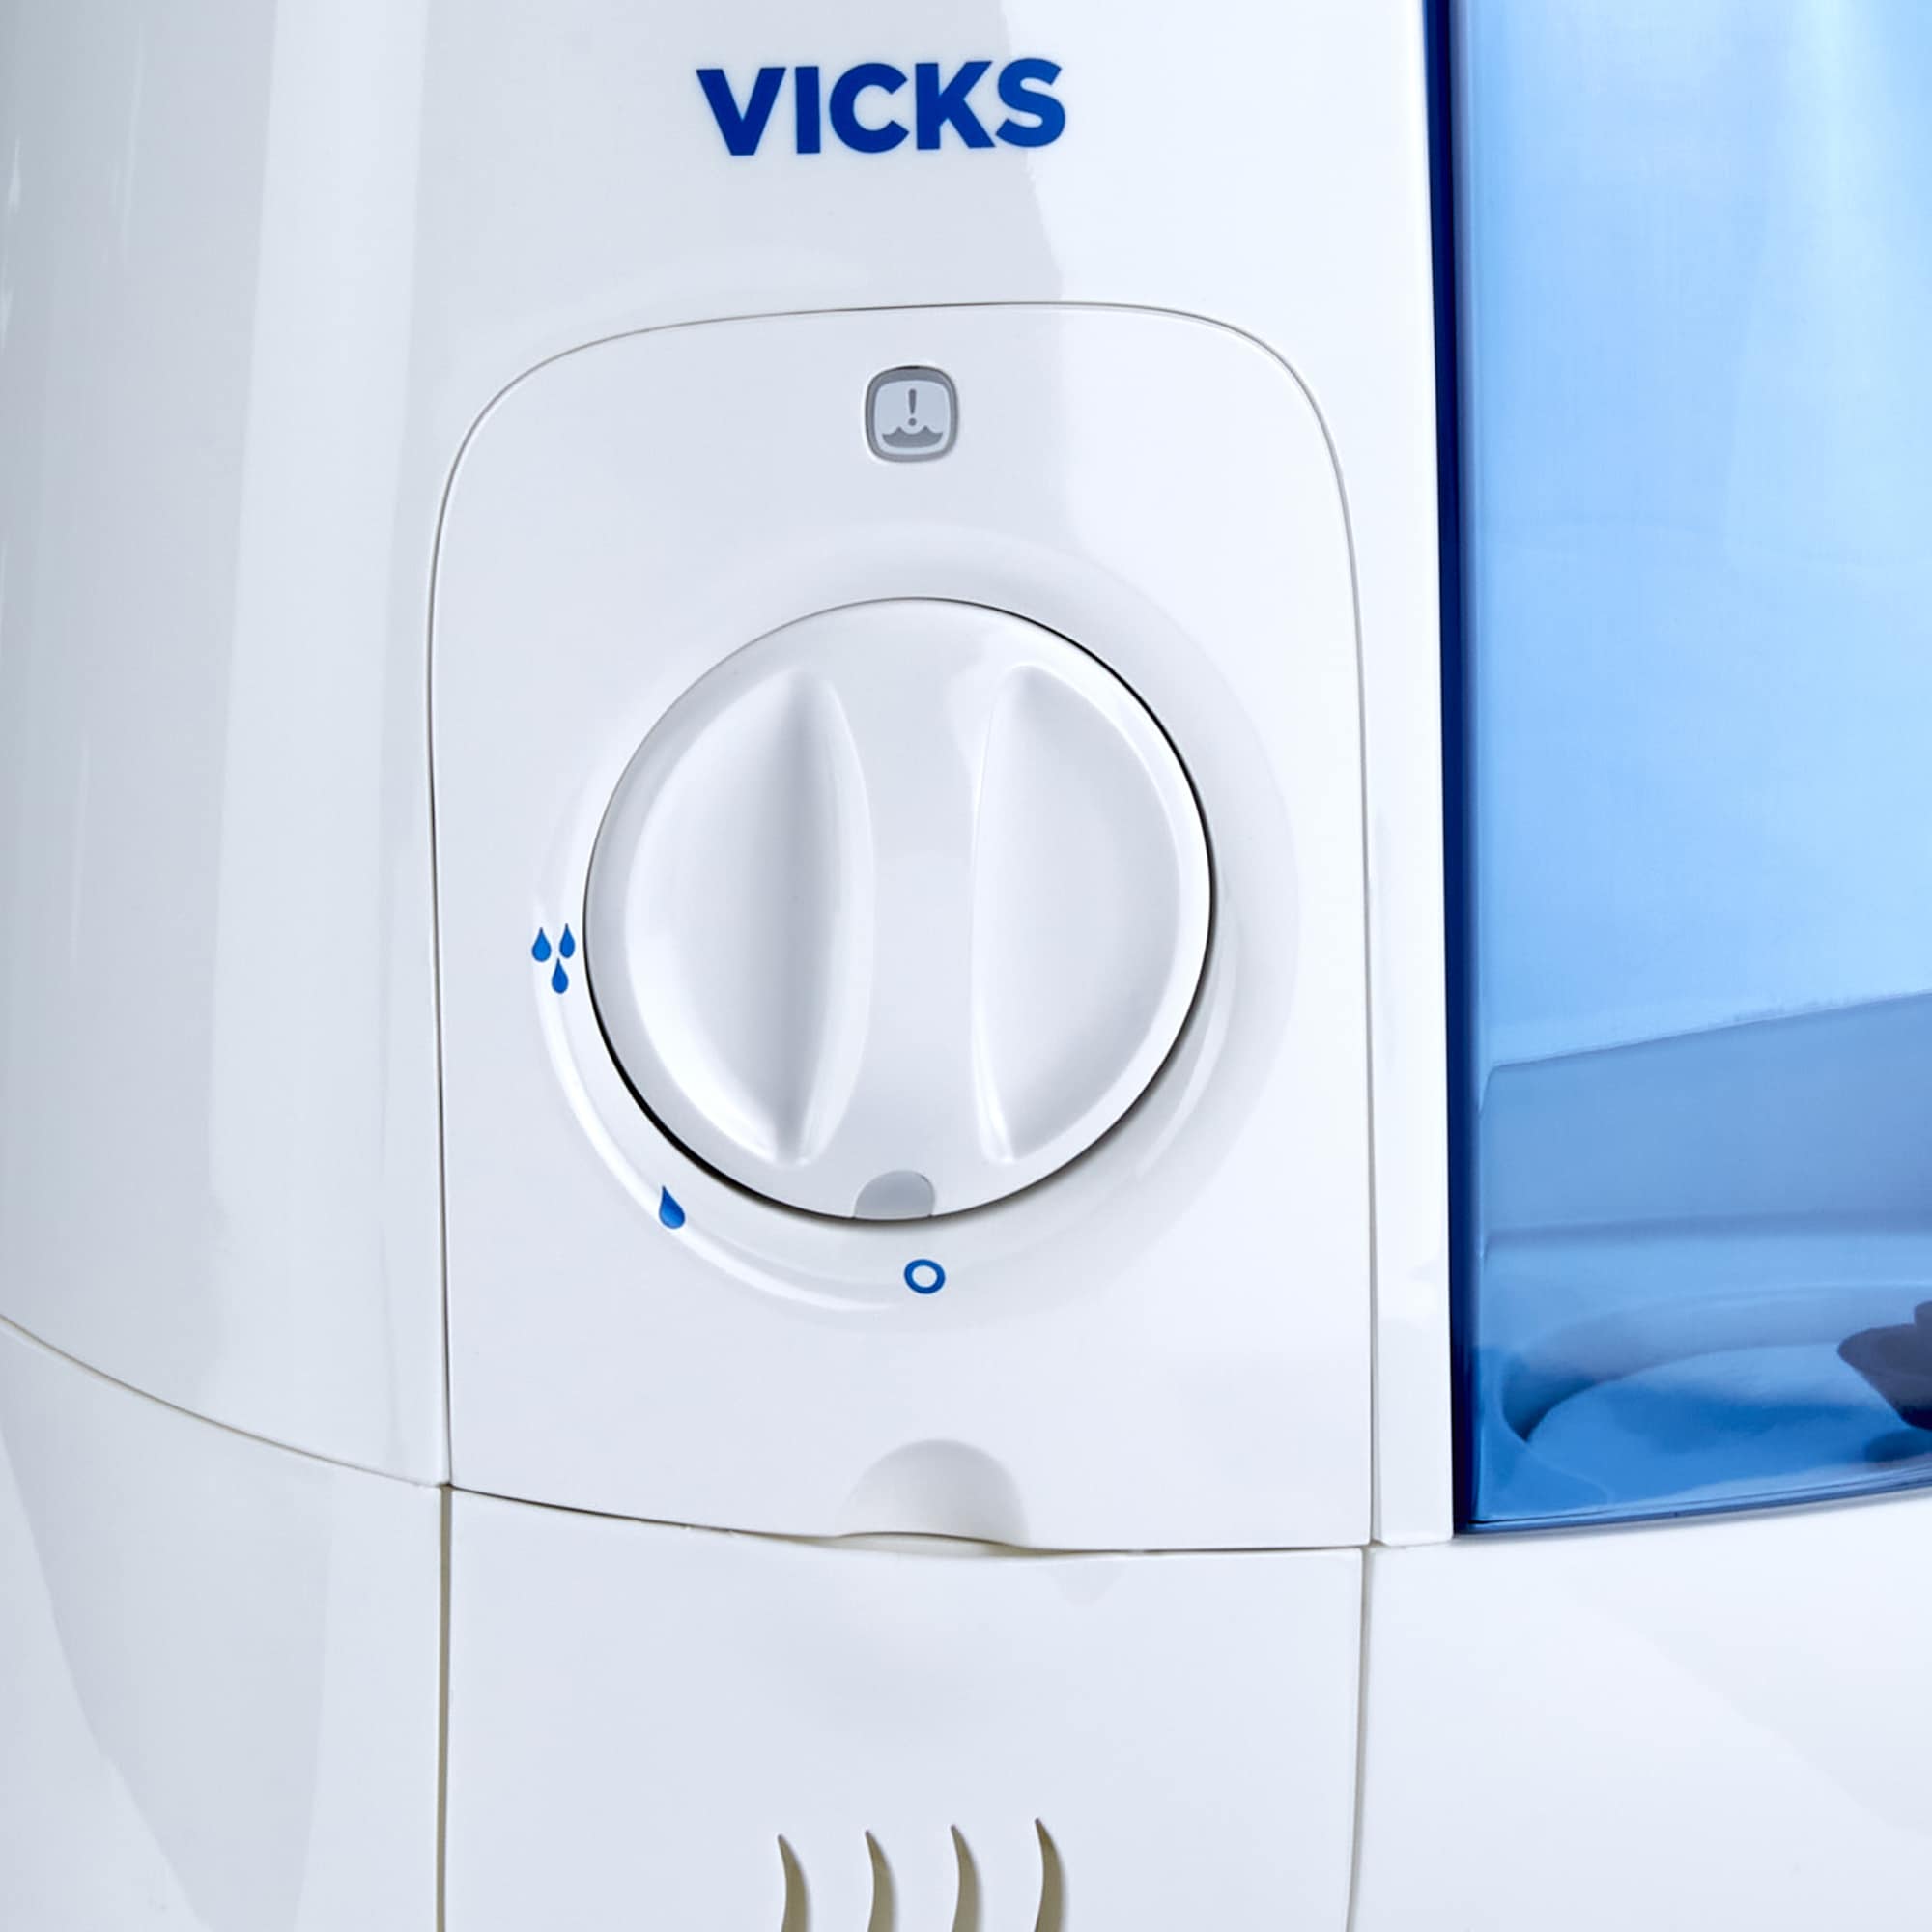 Vicks Warm Mist Humidifier, White/Blue - 1 ct